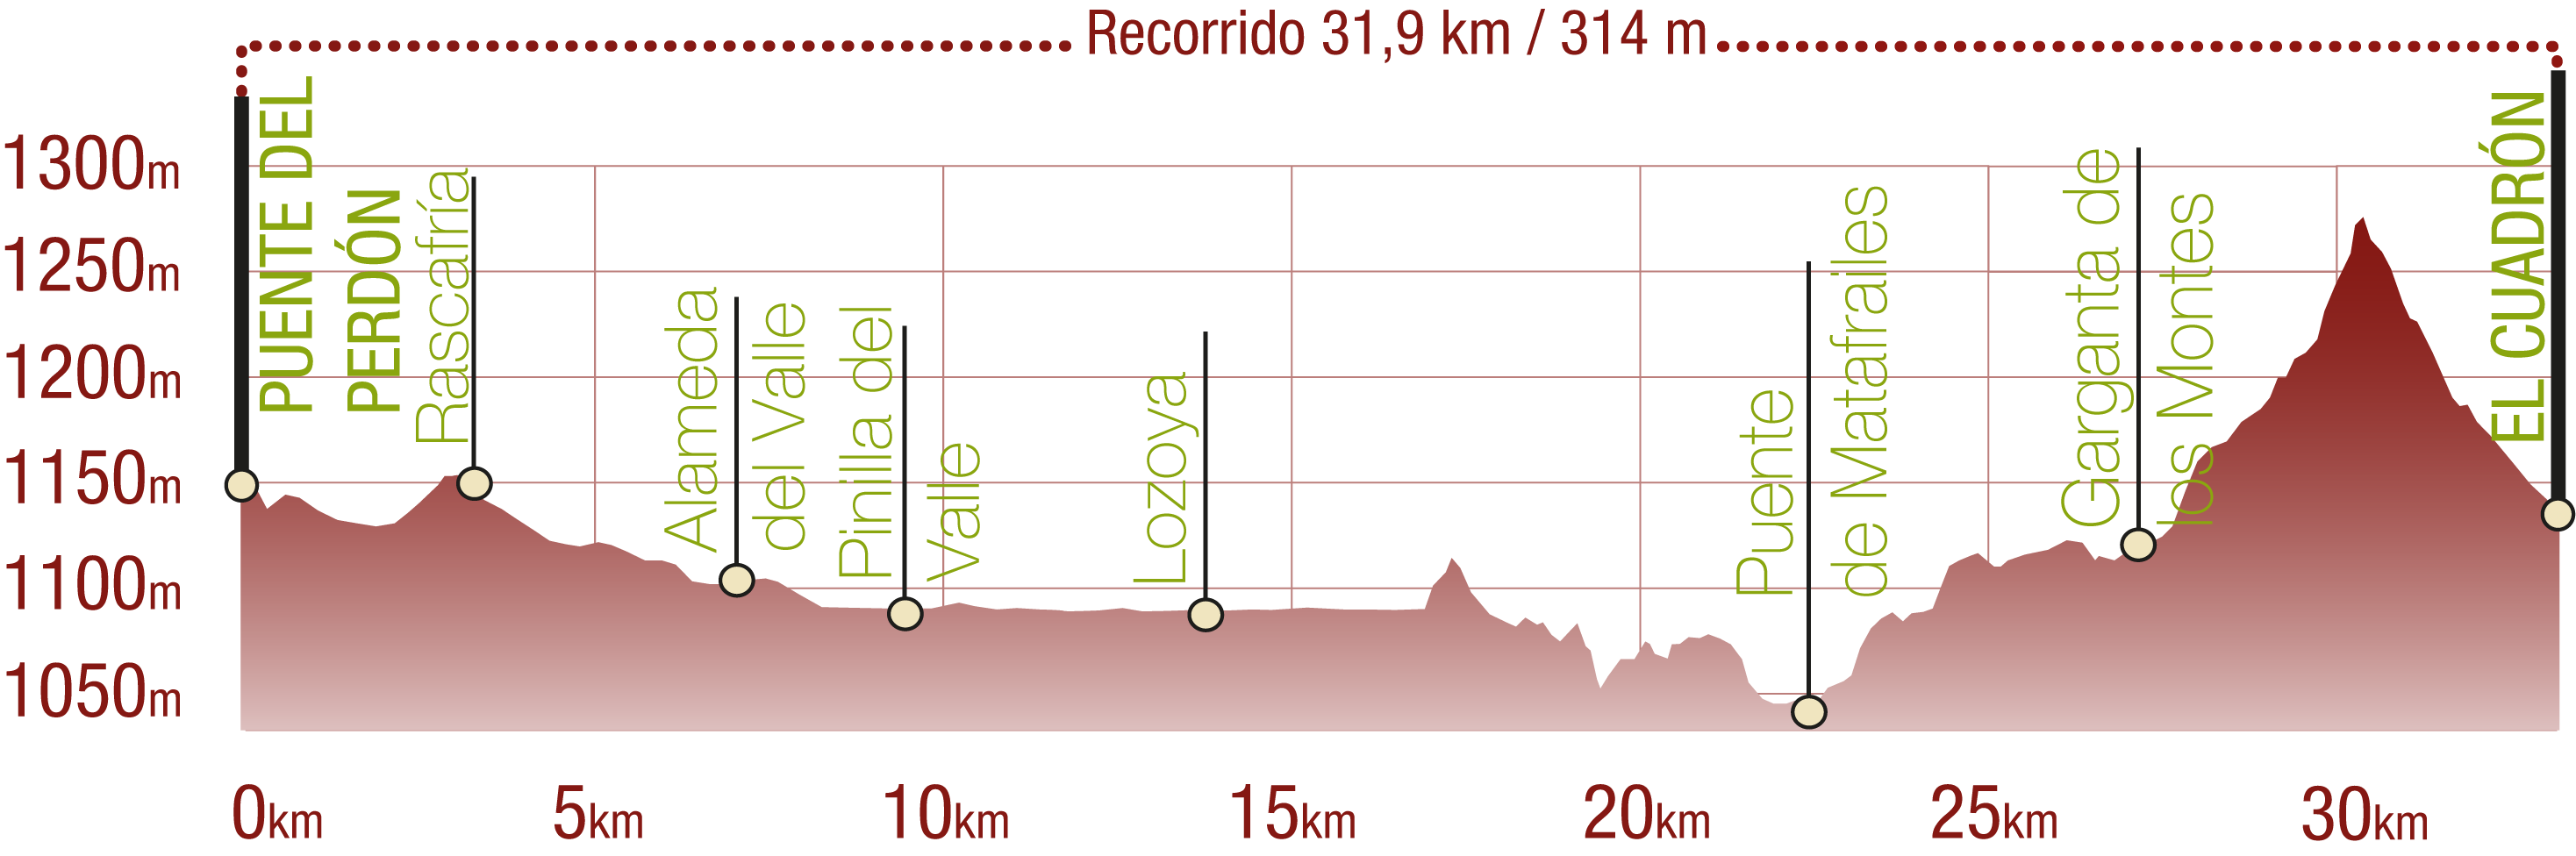 Perfil 
Perfil del rrecorrido ciclista del CN del Valle de Lozoya: 31,9 km / Desnivel de subida 314 m

